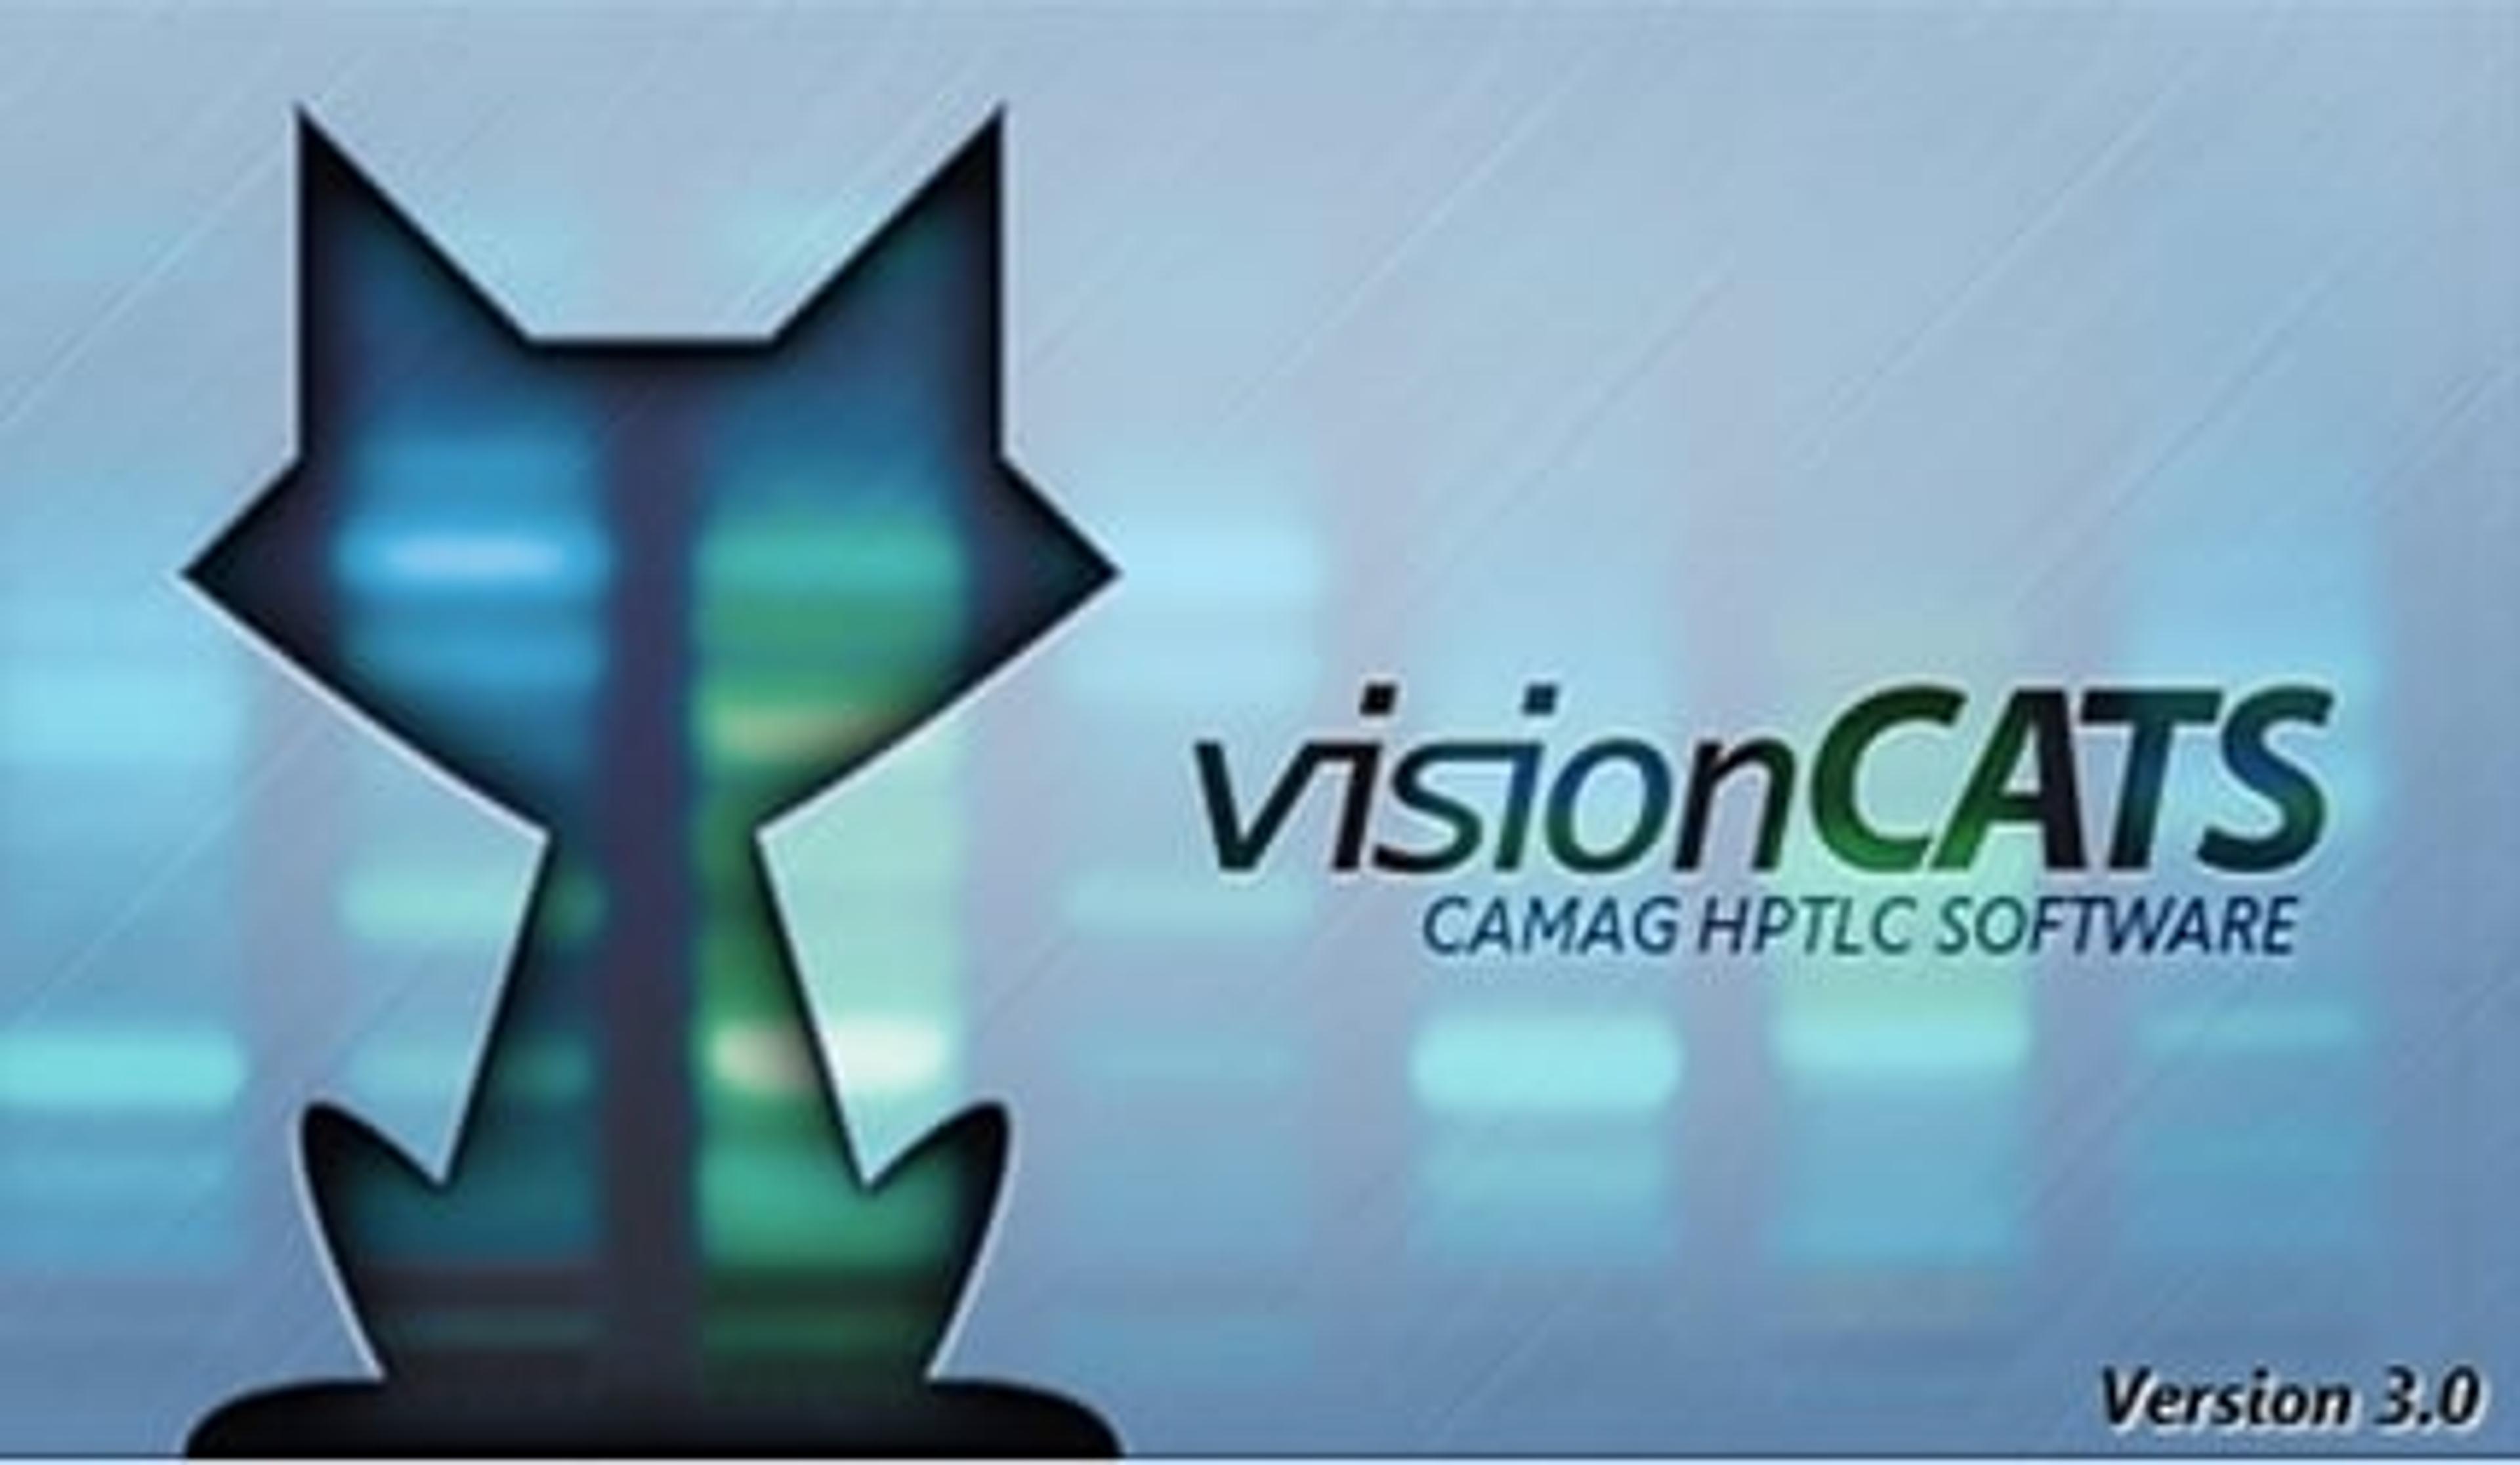 CAMAG® HPTLC Software visionCATS